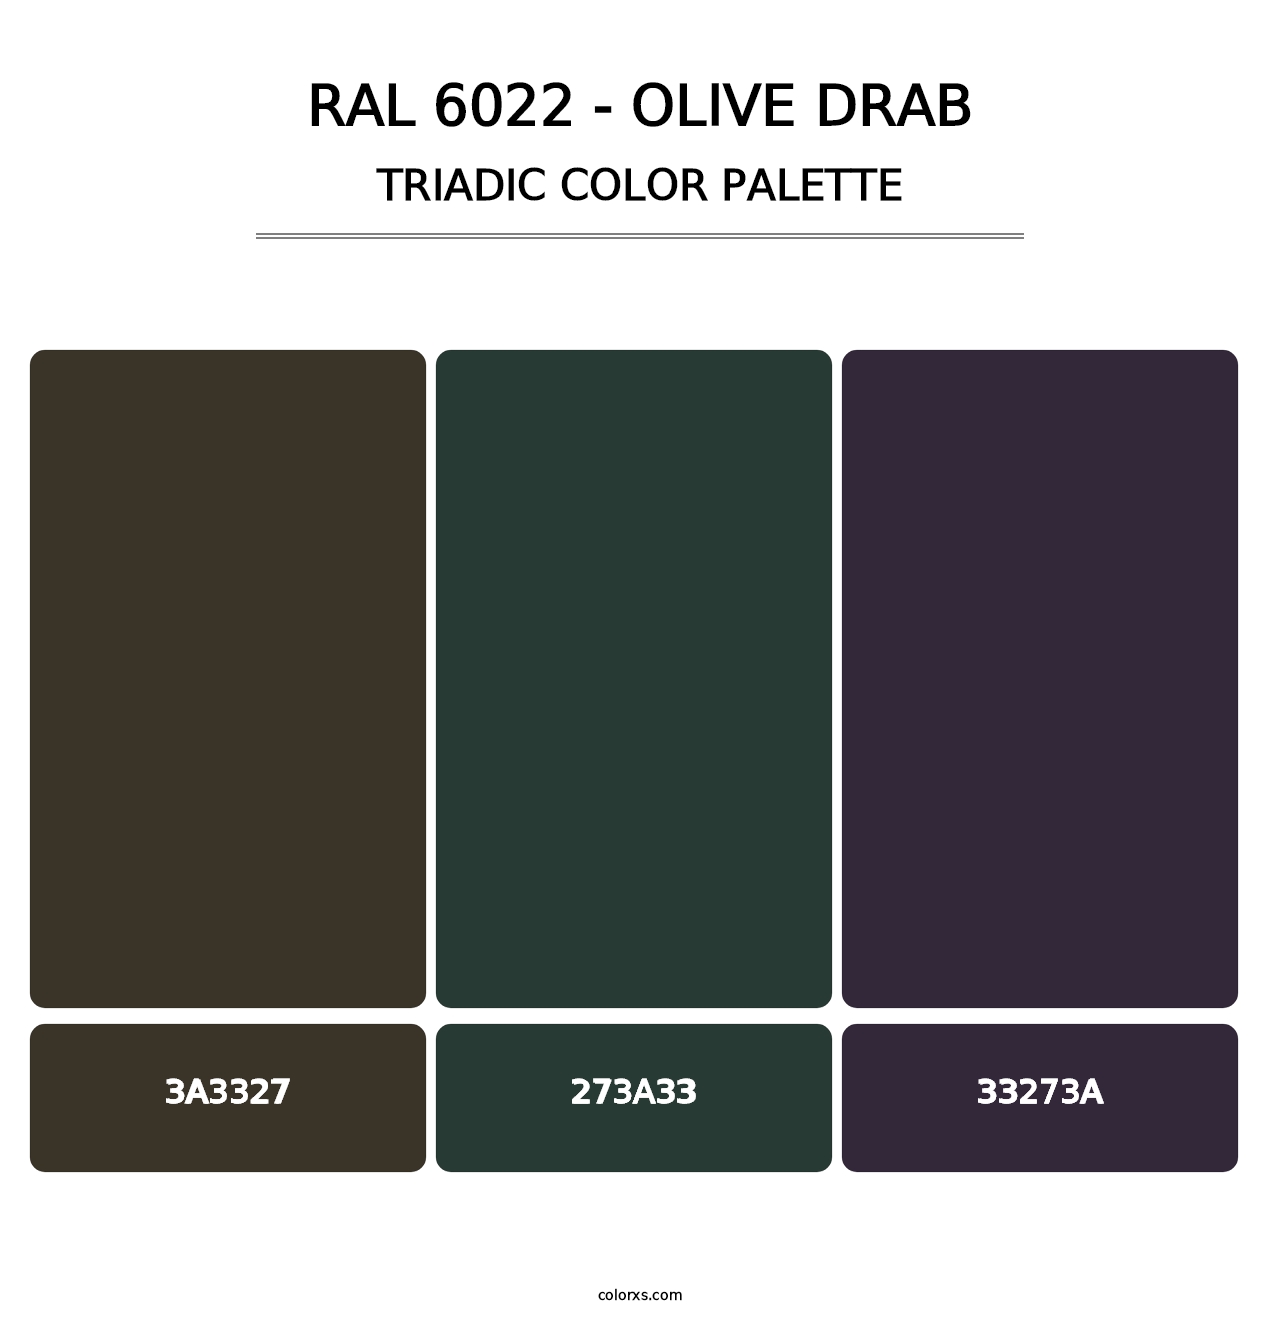 RAL 6022 - Olive Drab - Triadic Color Palette